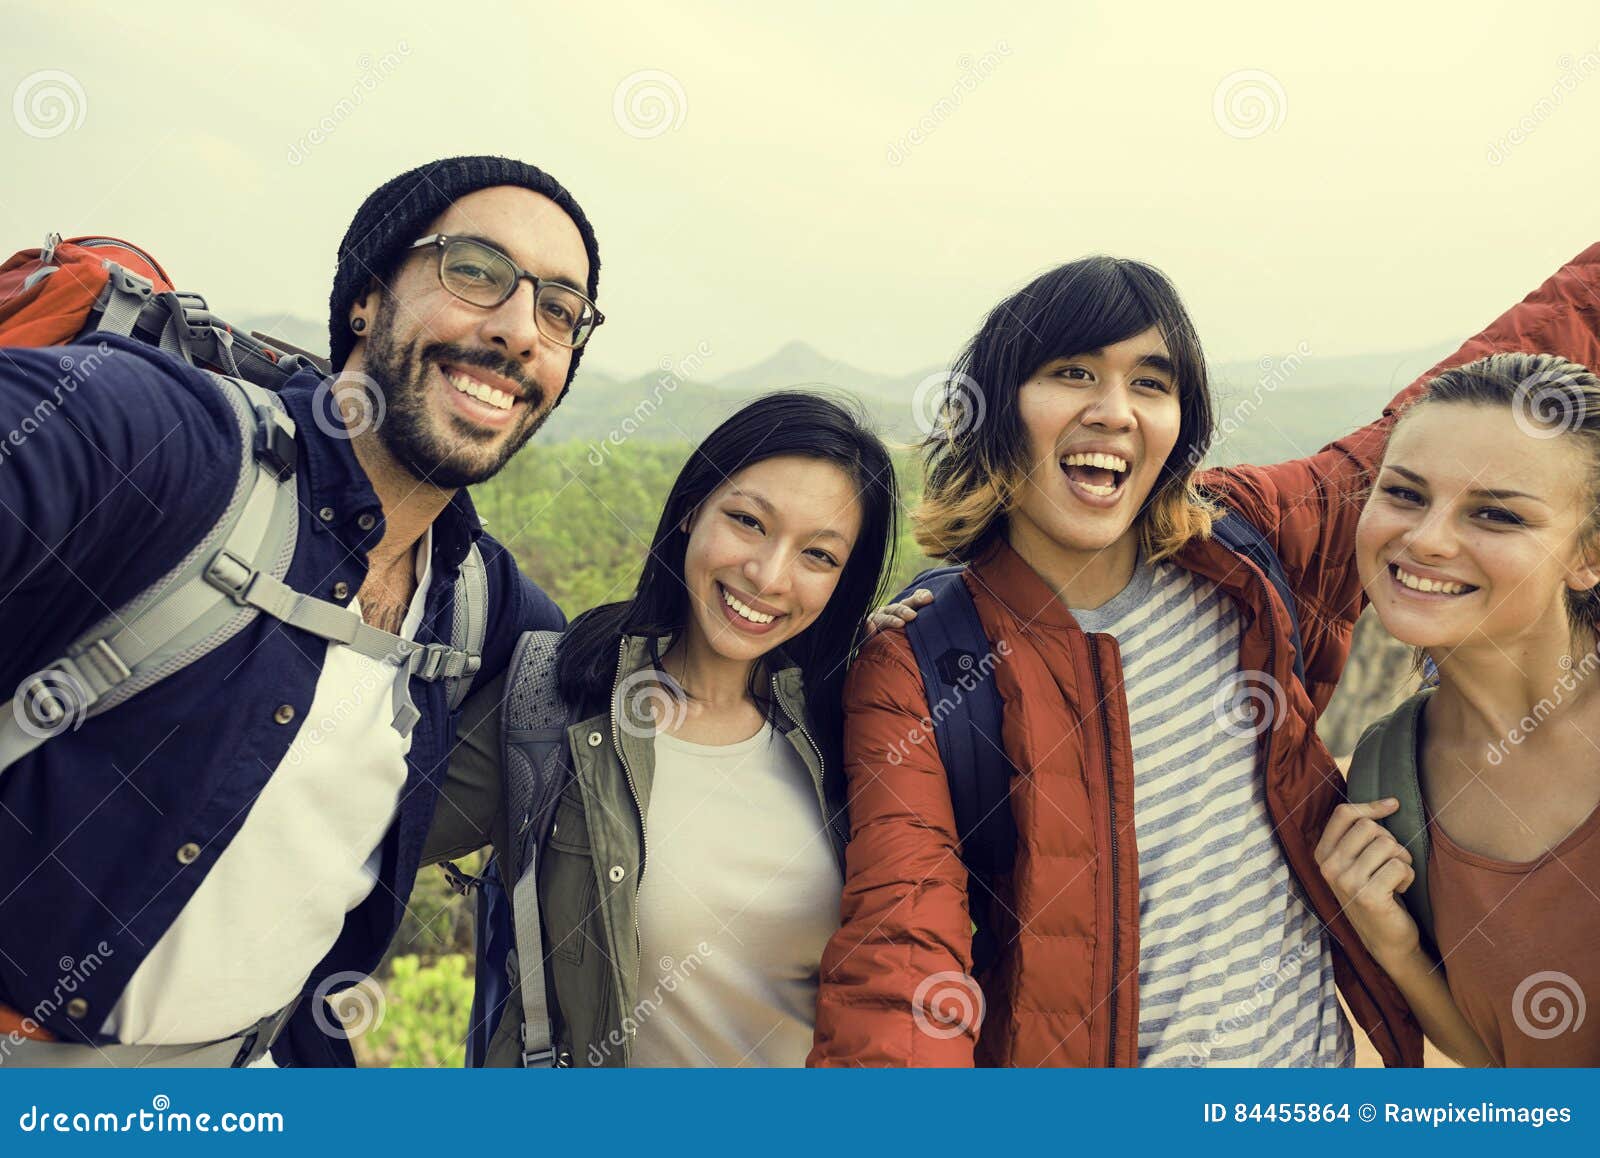 people friendship hangout traveling destination camping concept